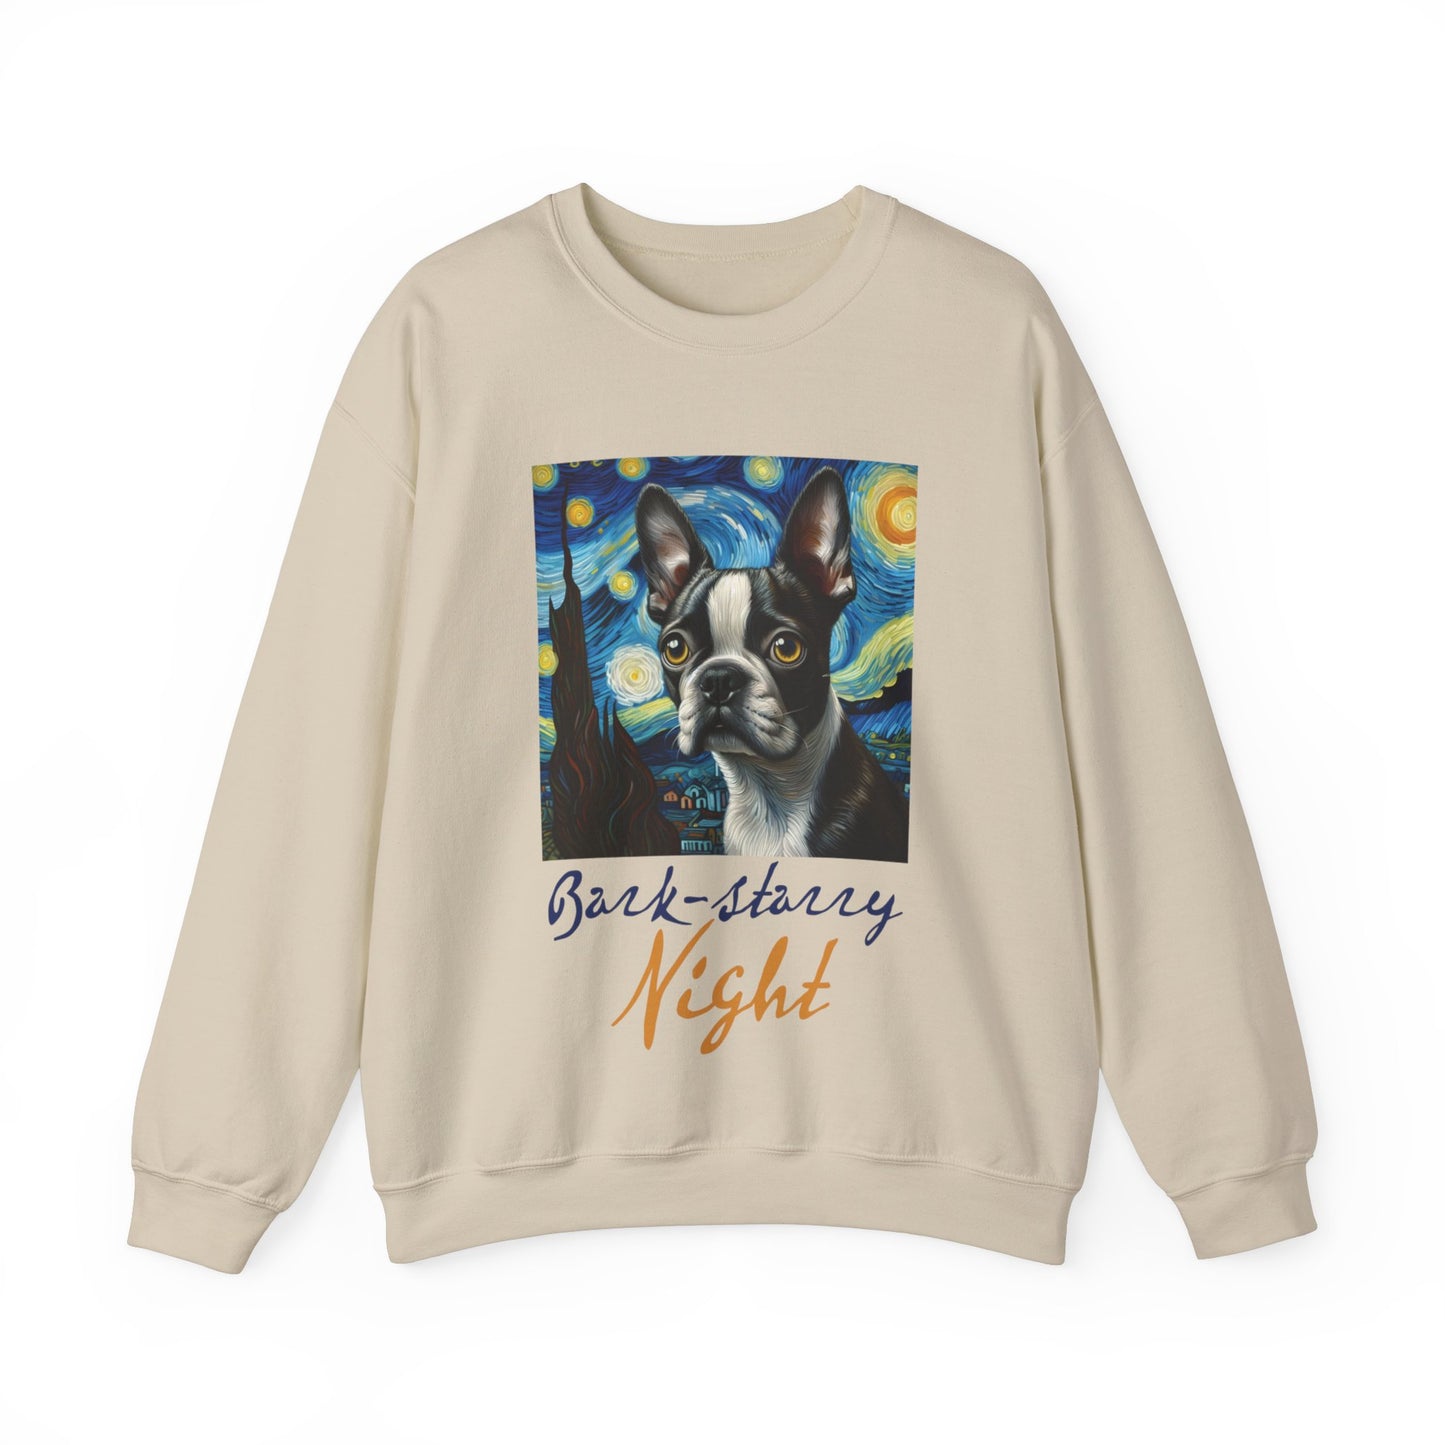 Rebel - Unisex Sweatshirt for Boston Terrier lovers